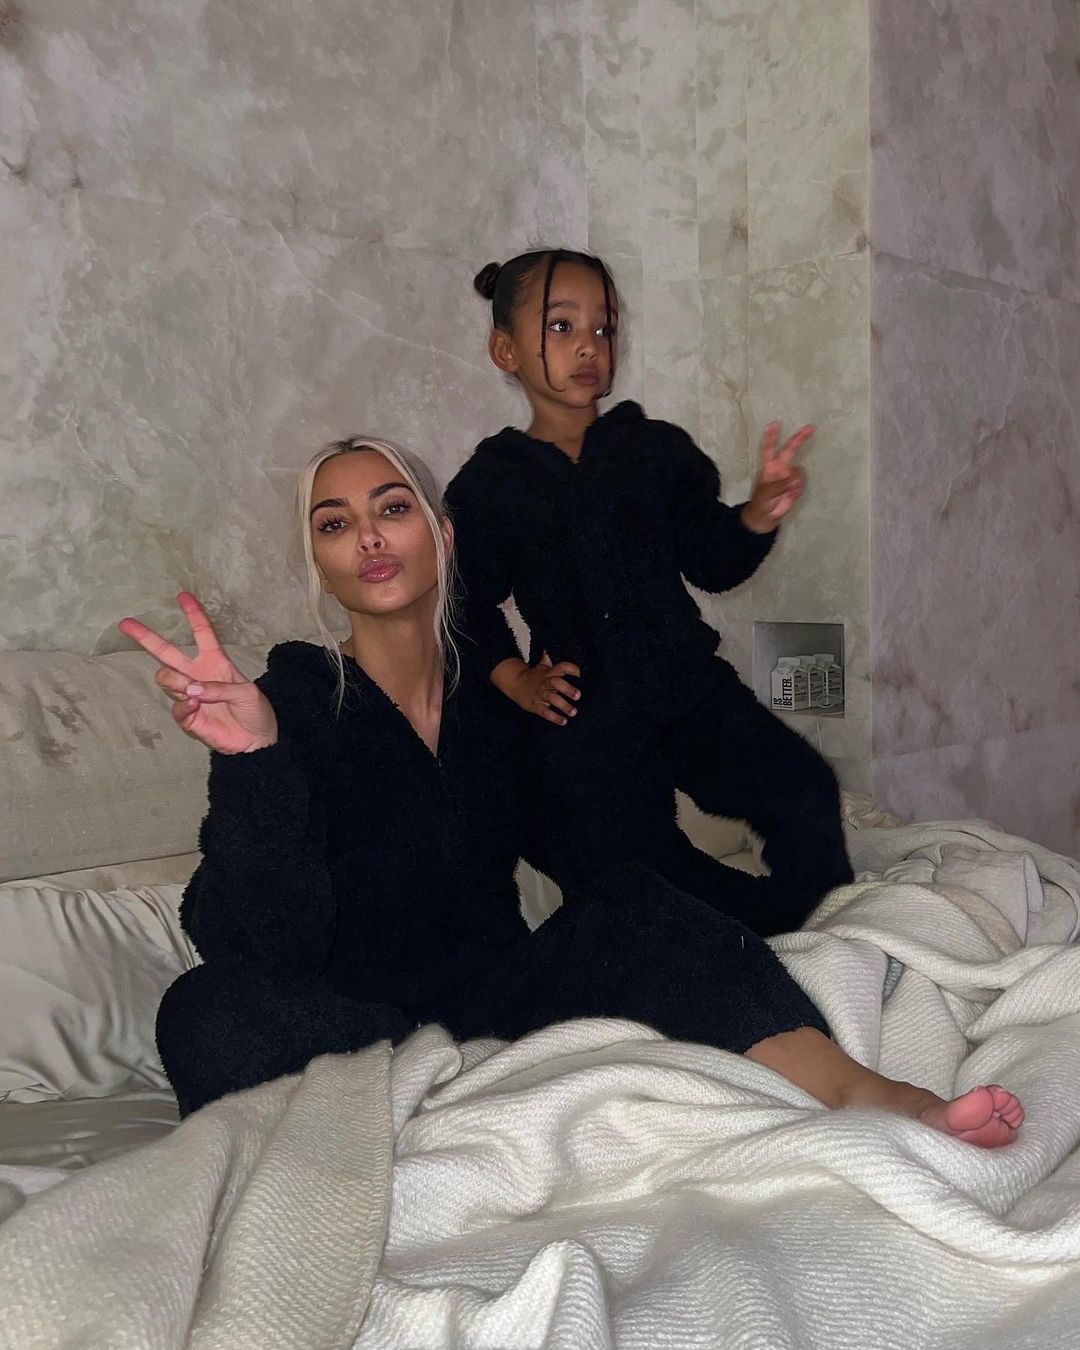 Chicago West's Cutest Photos Prove She's Kim Kardashian's Twin | In ...